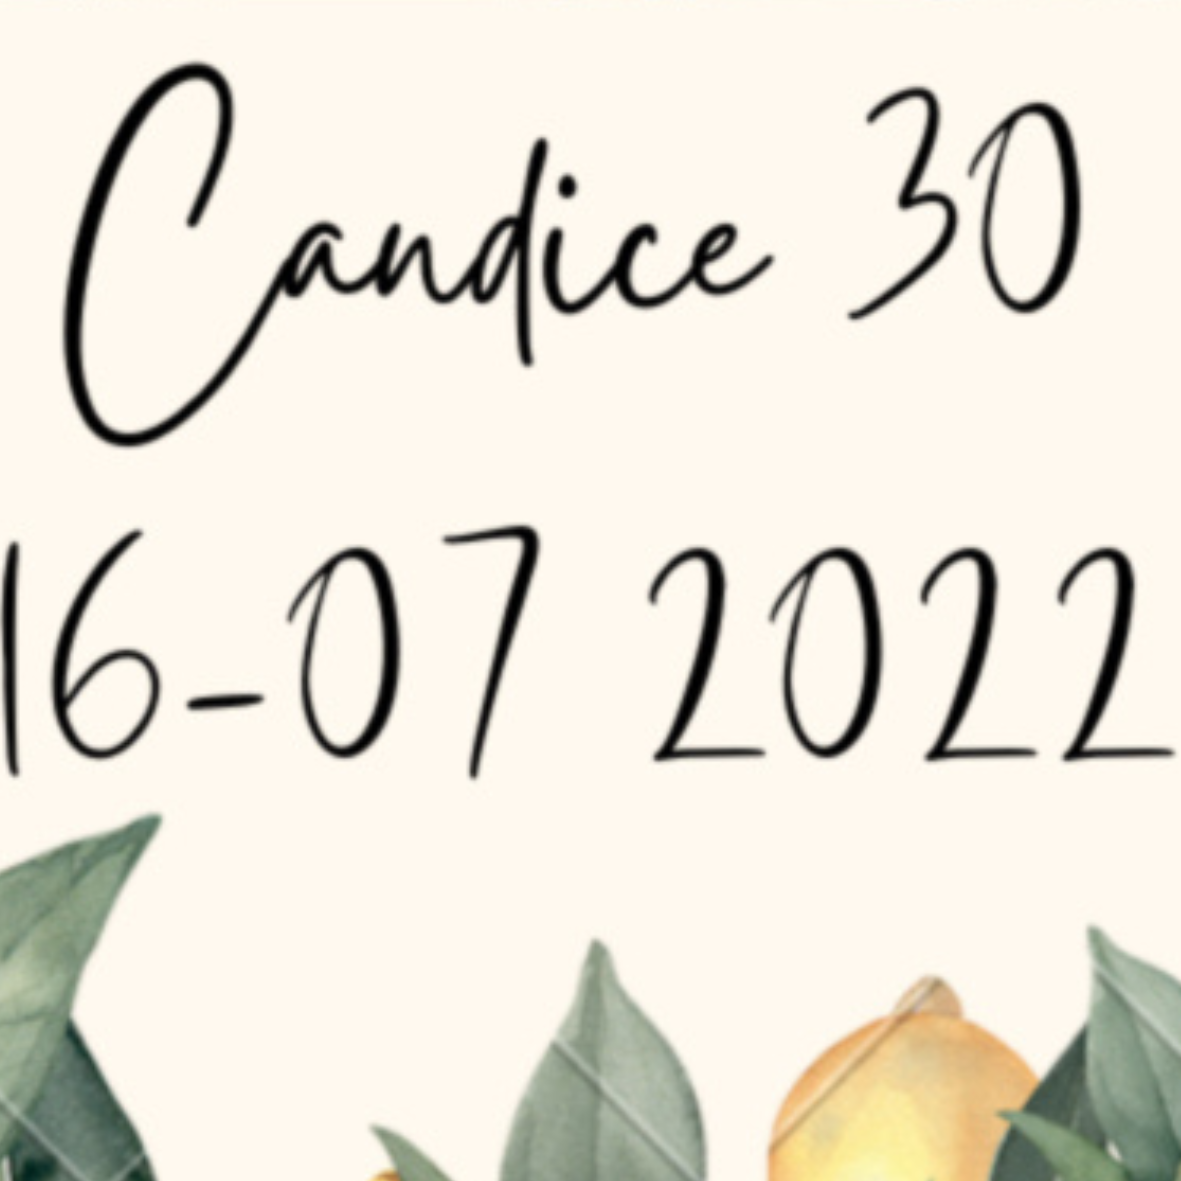 Candice 30